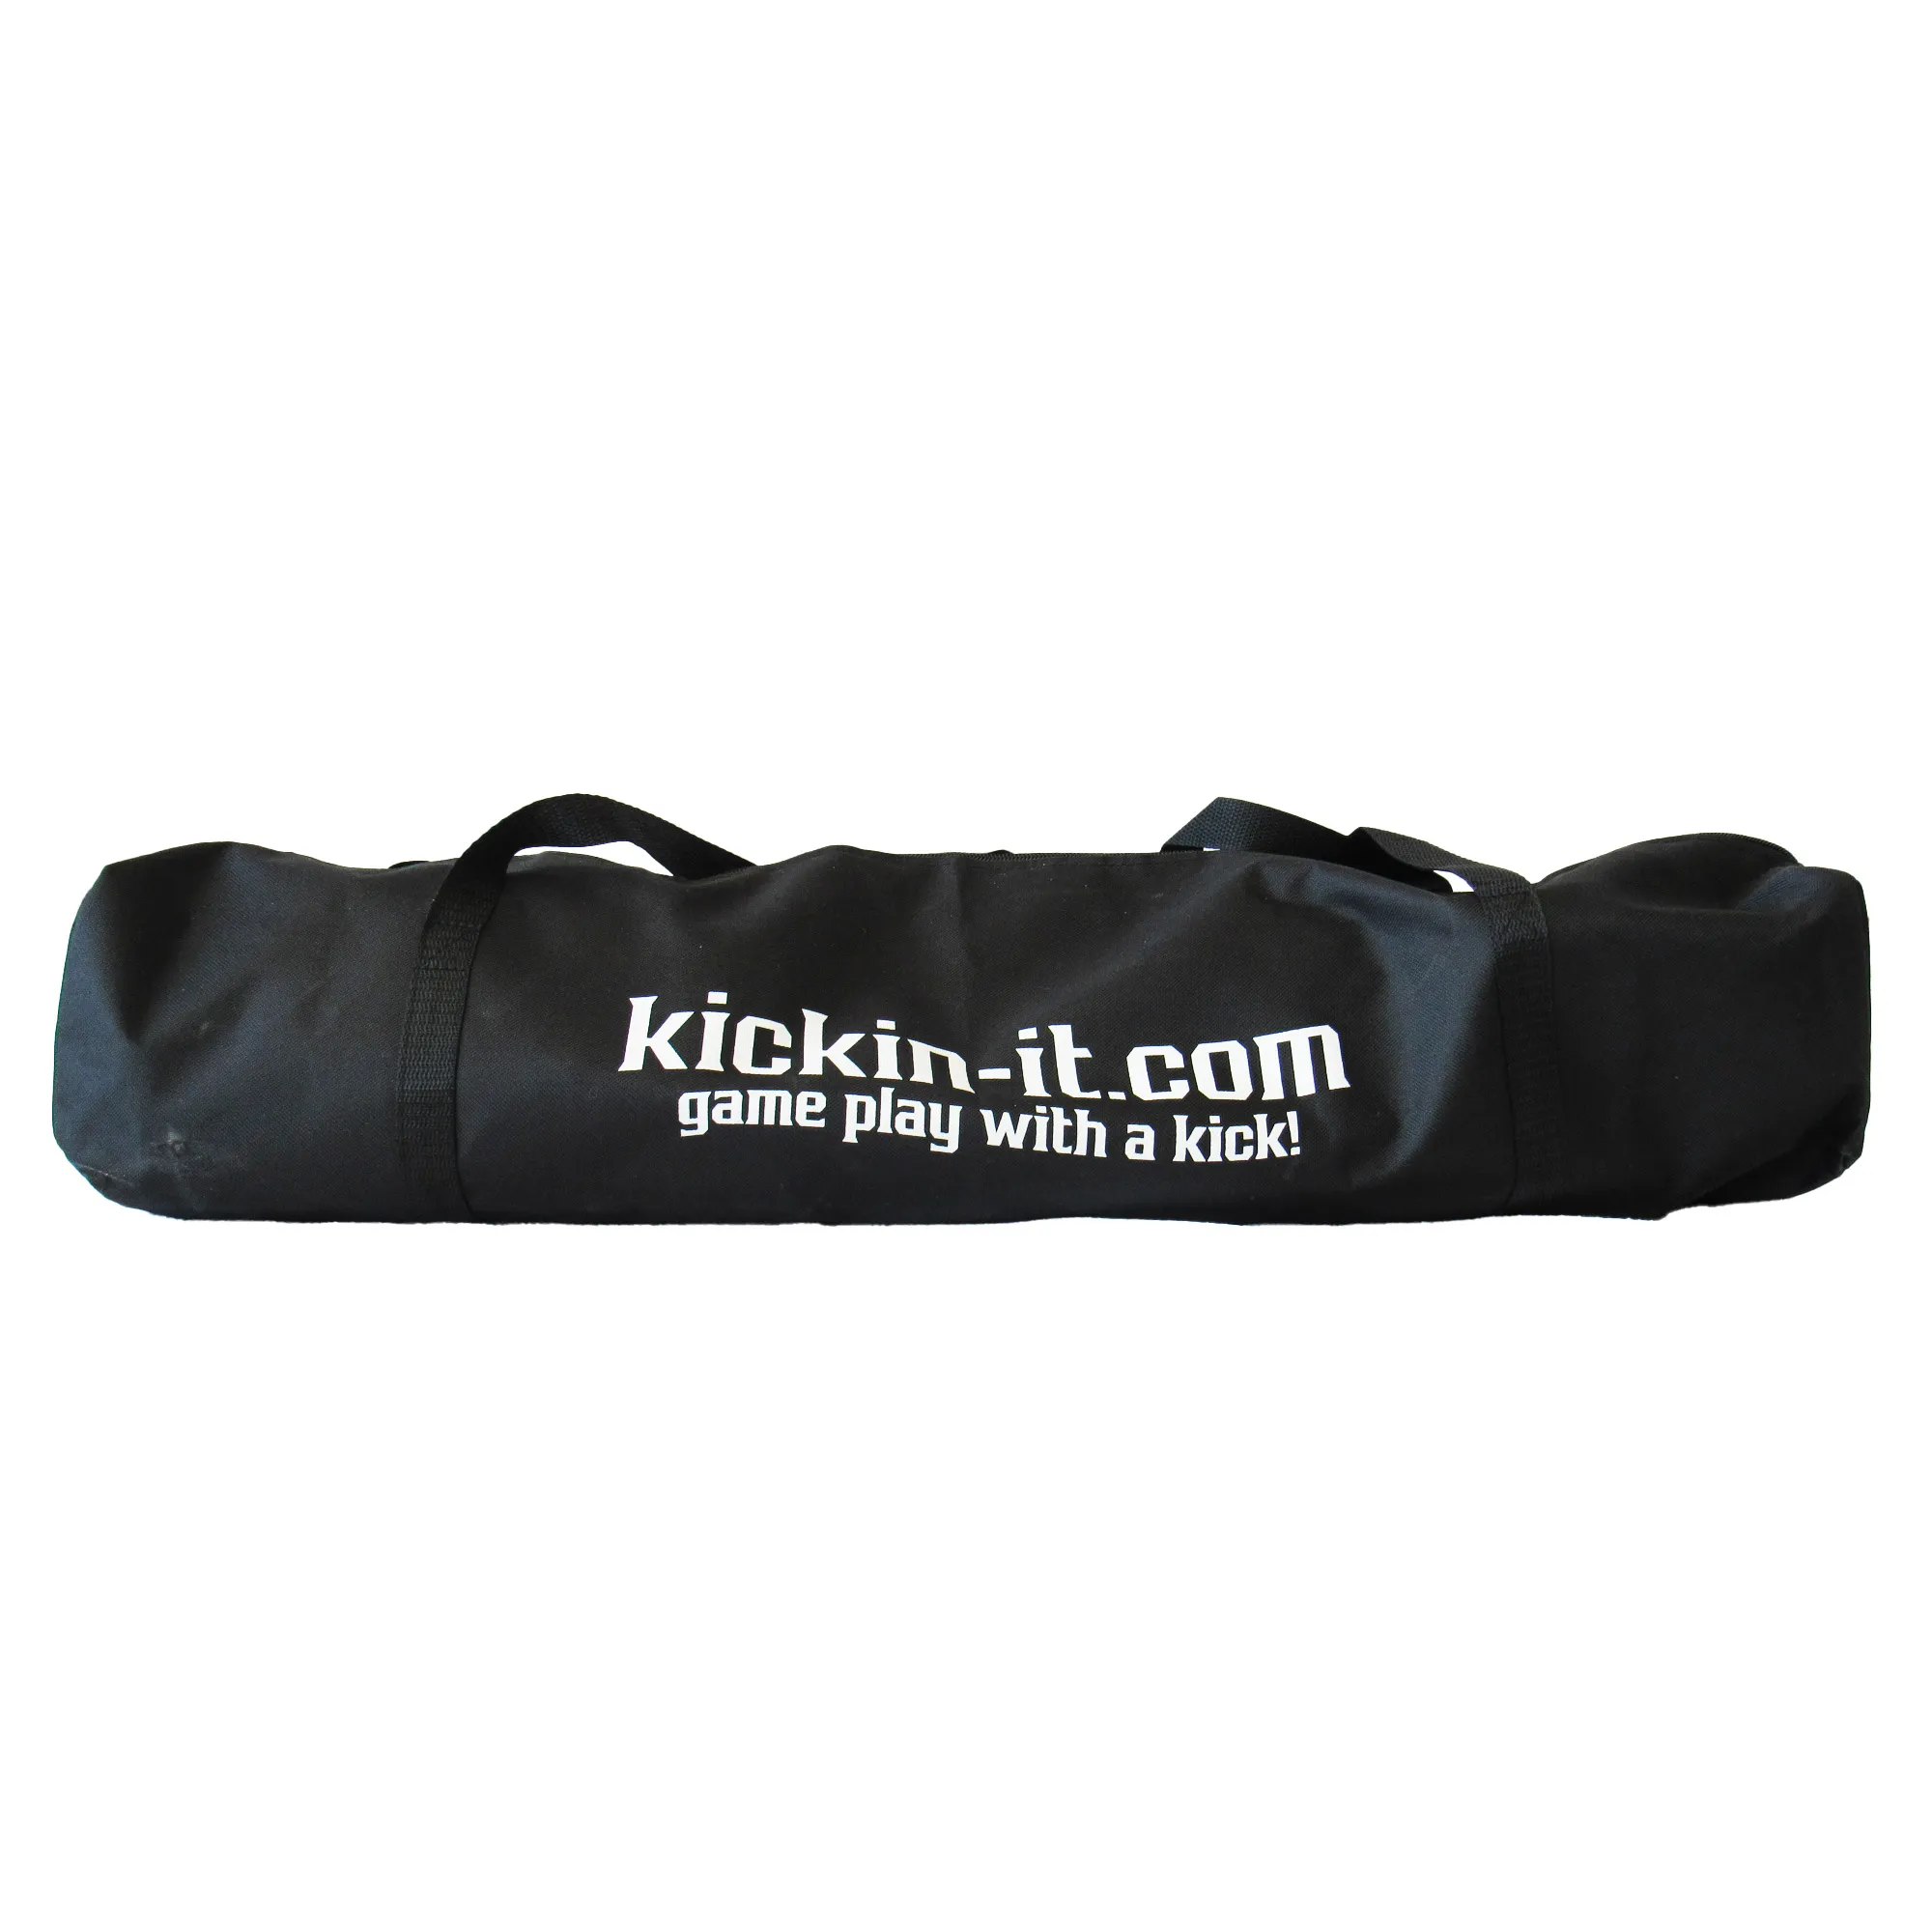 kickin-it bag